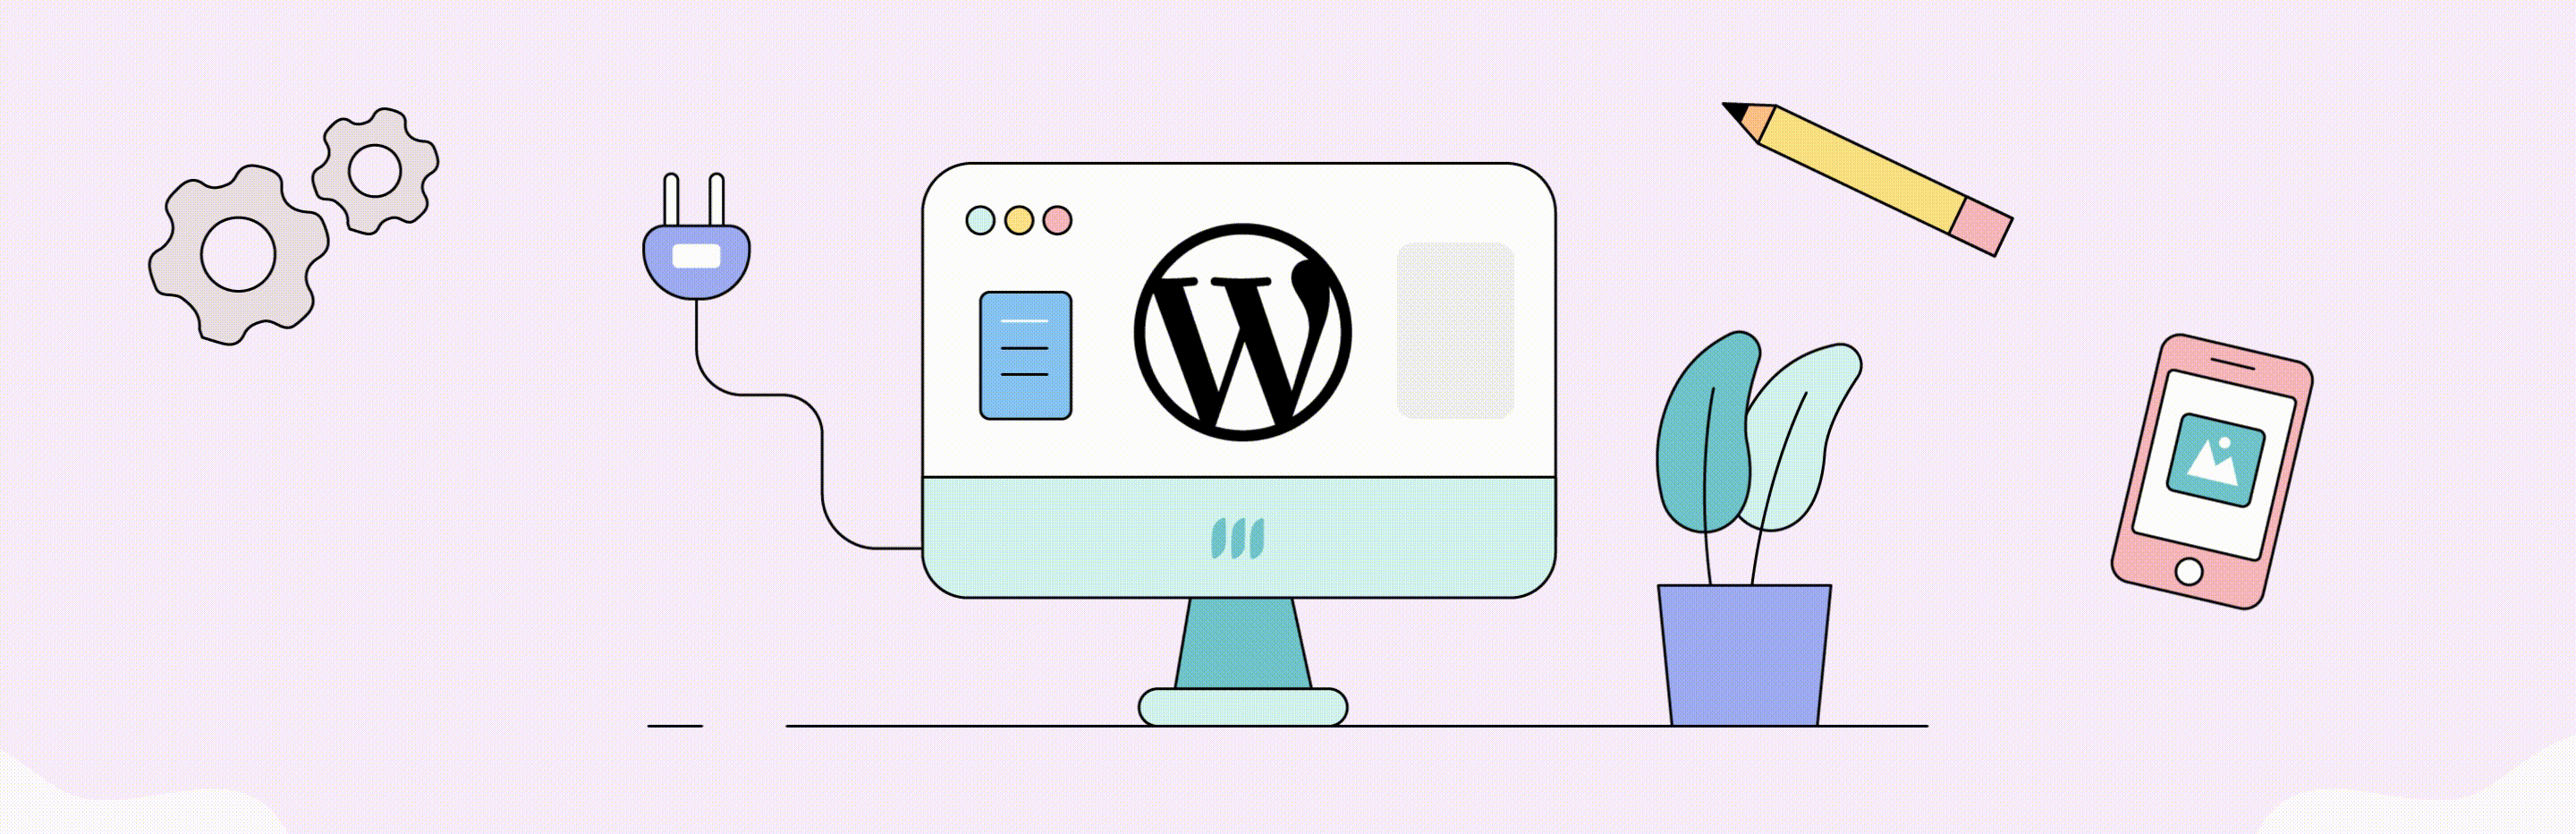 wordpress nettside